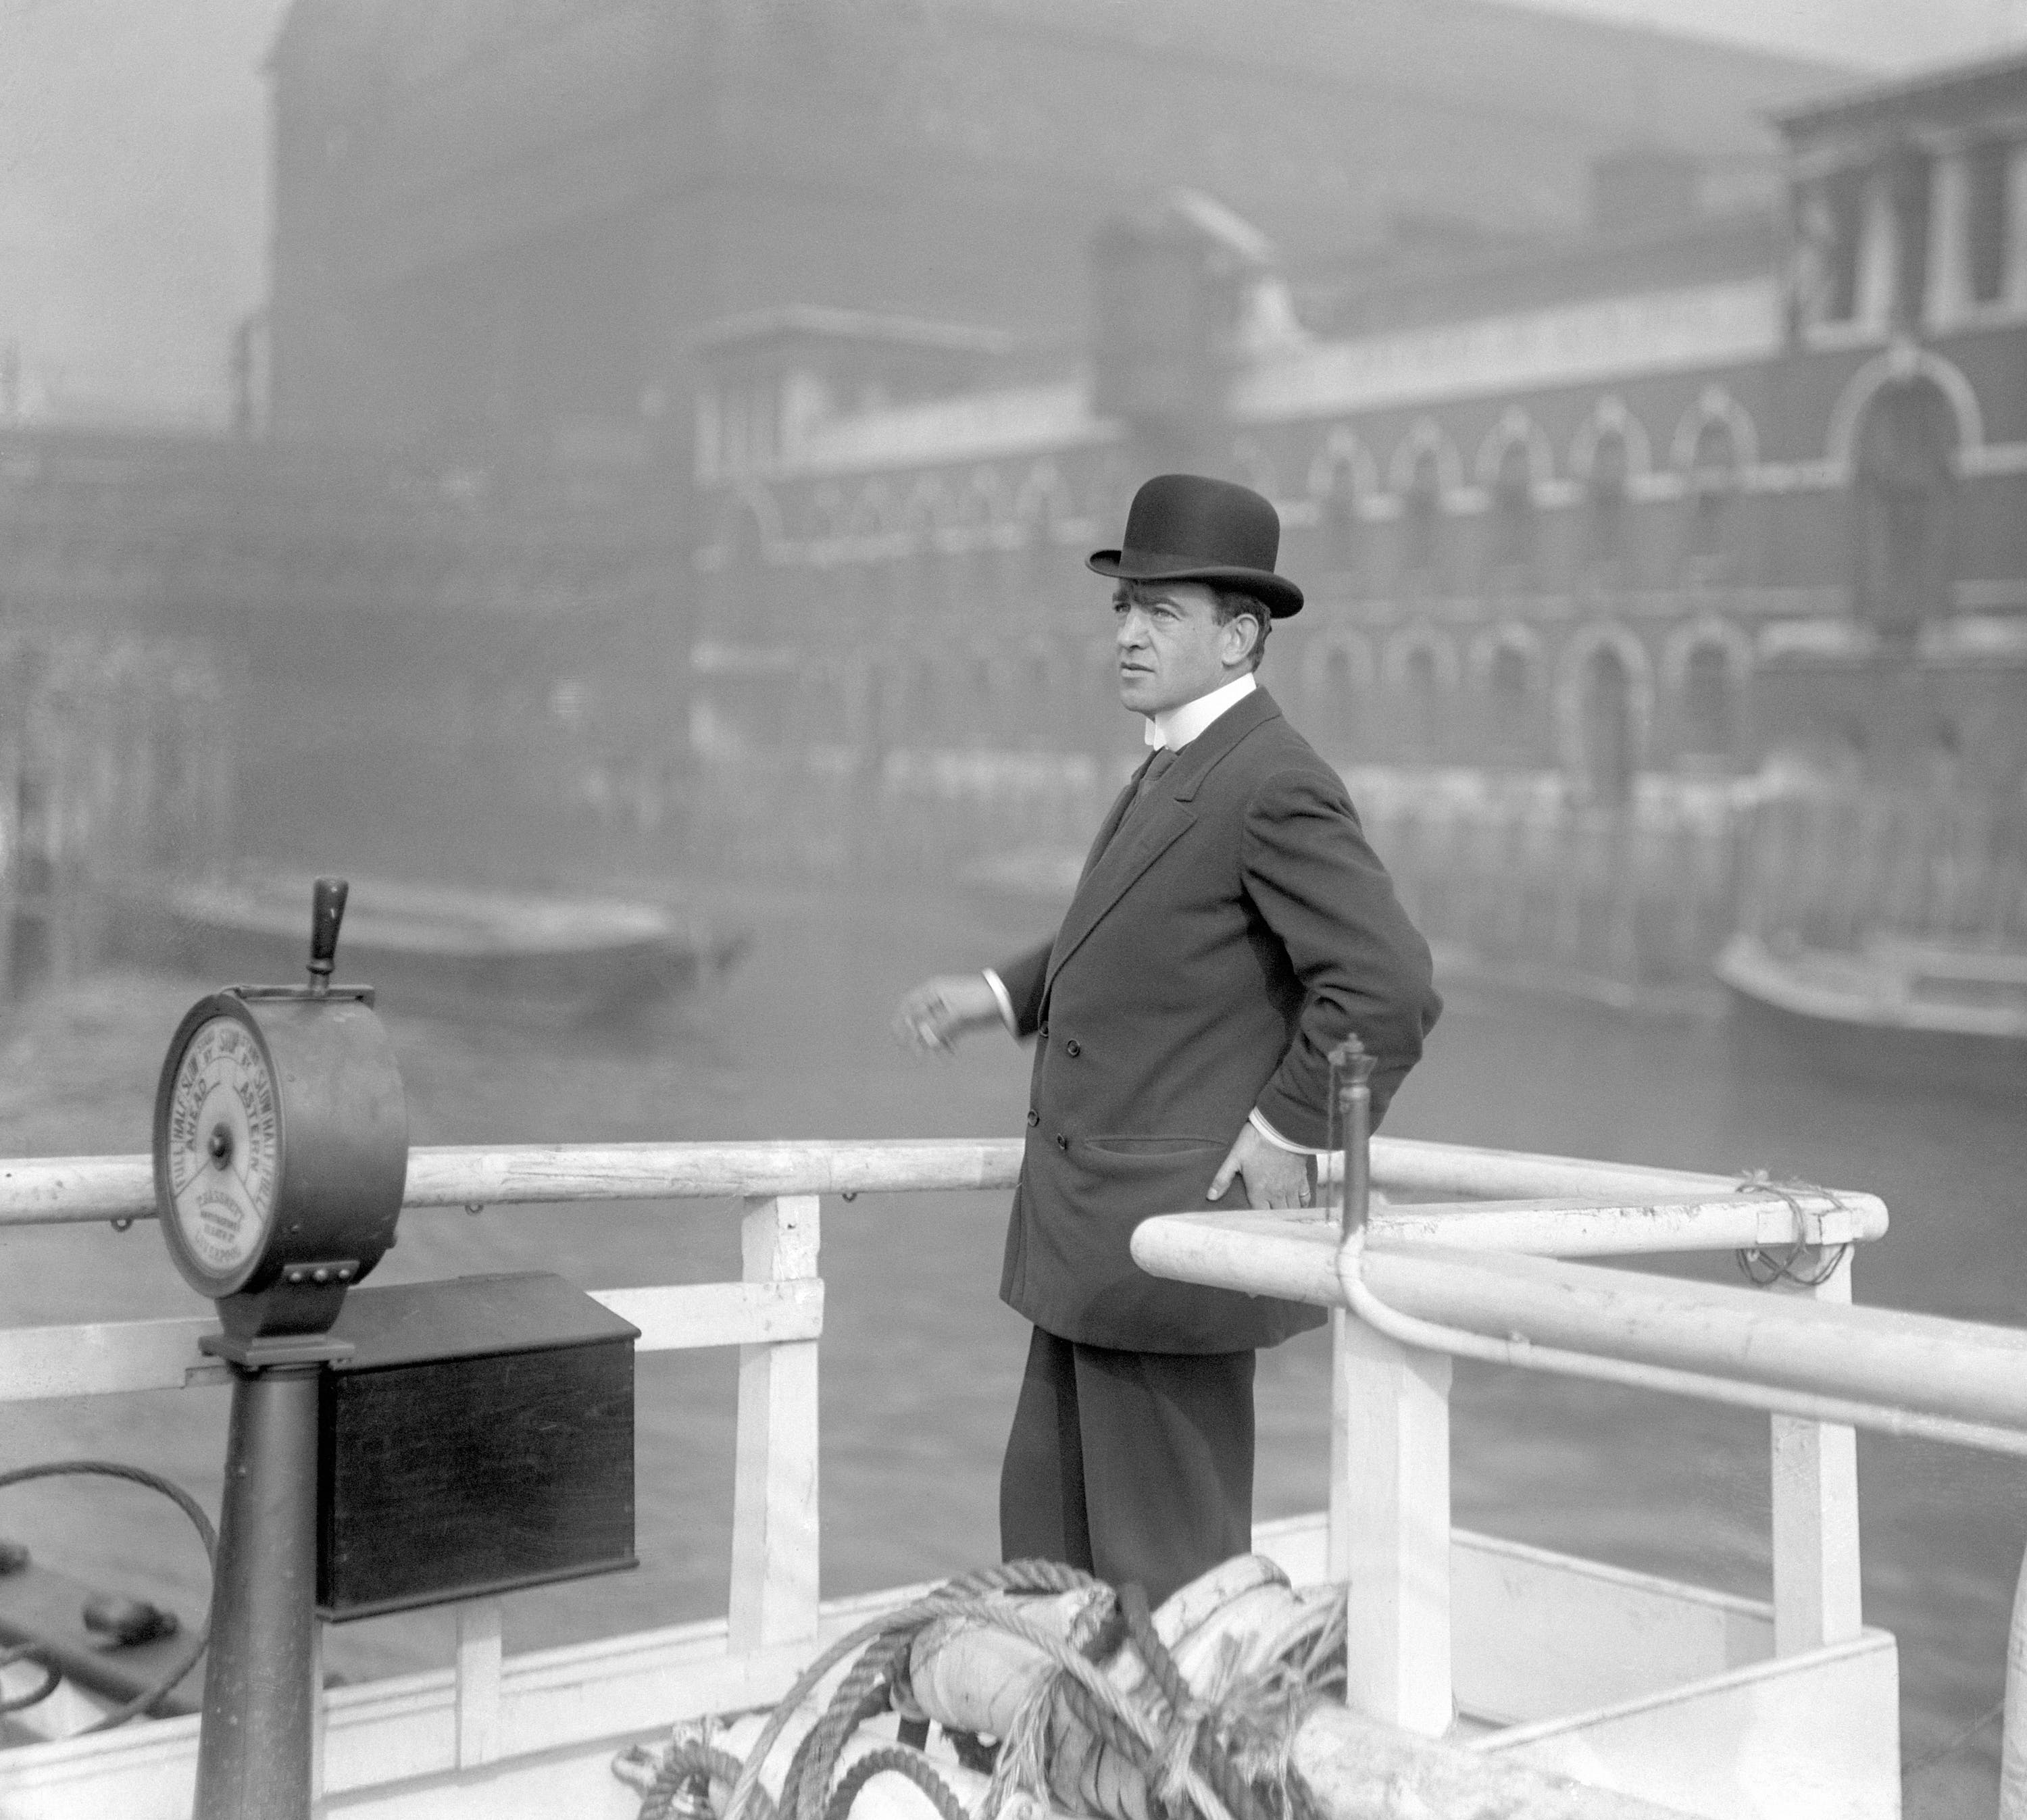 Ernest Shackleton on the bridge of the Nimrod, moored on the Thames